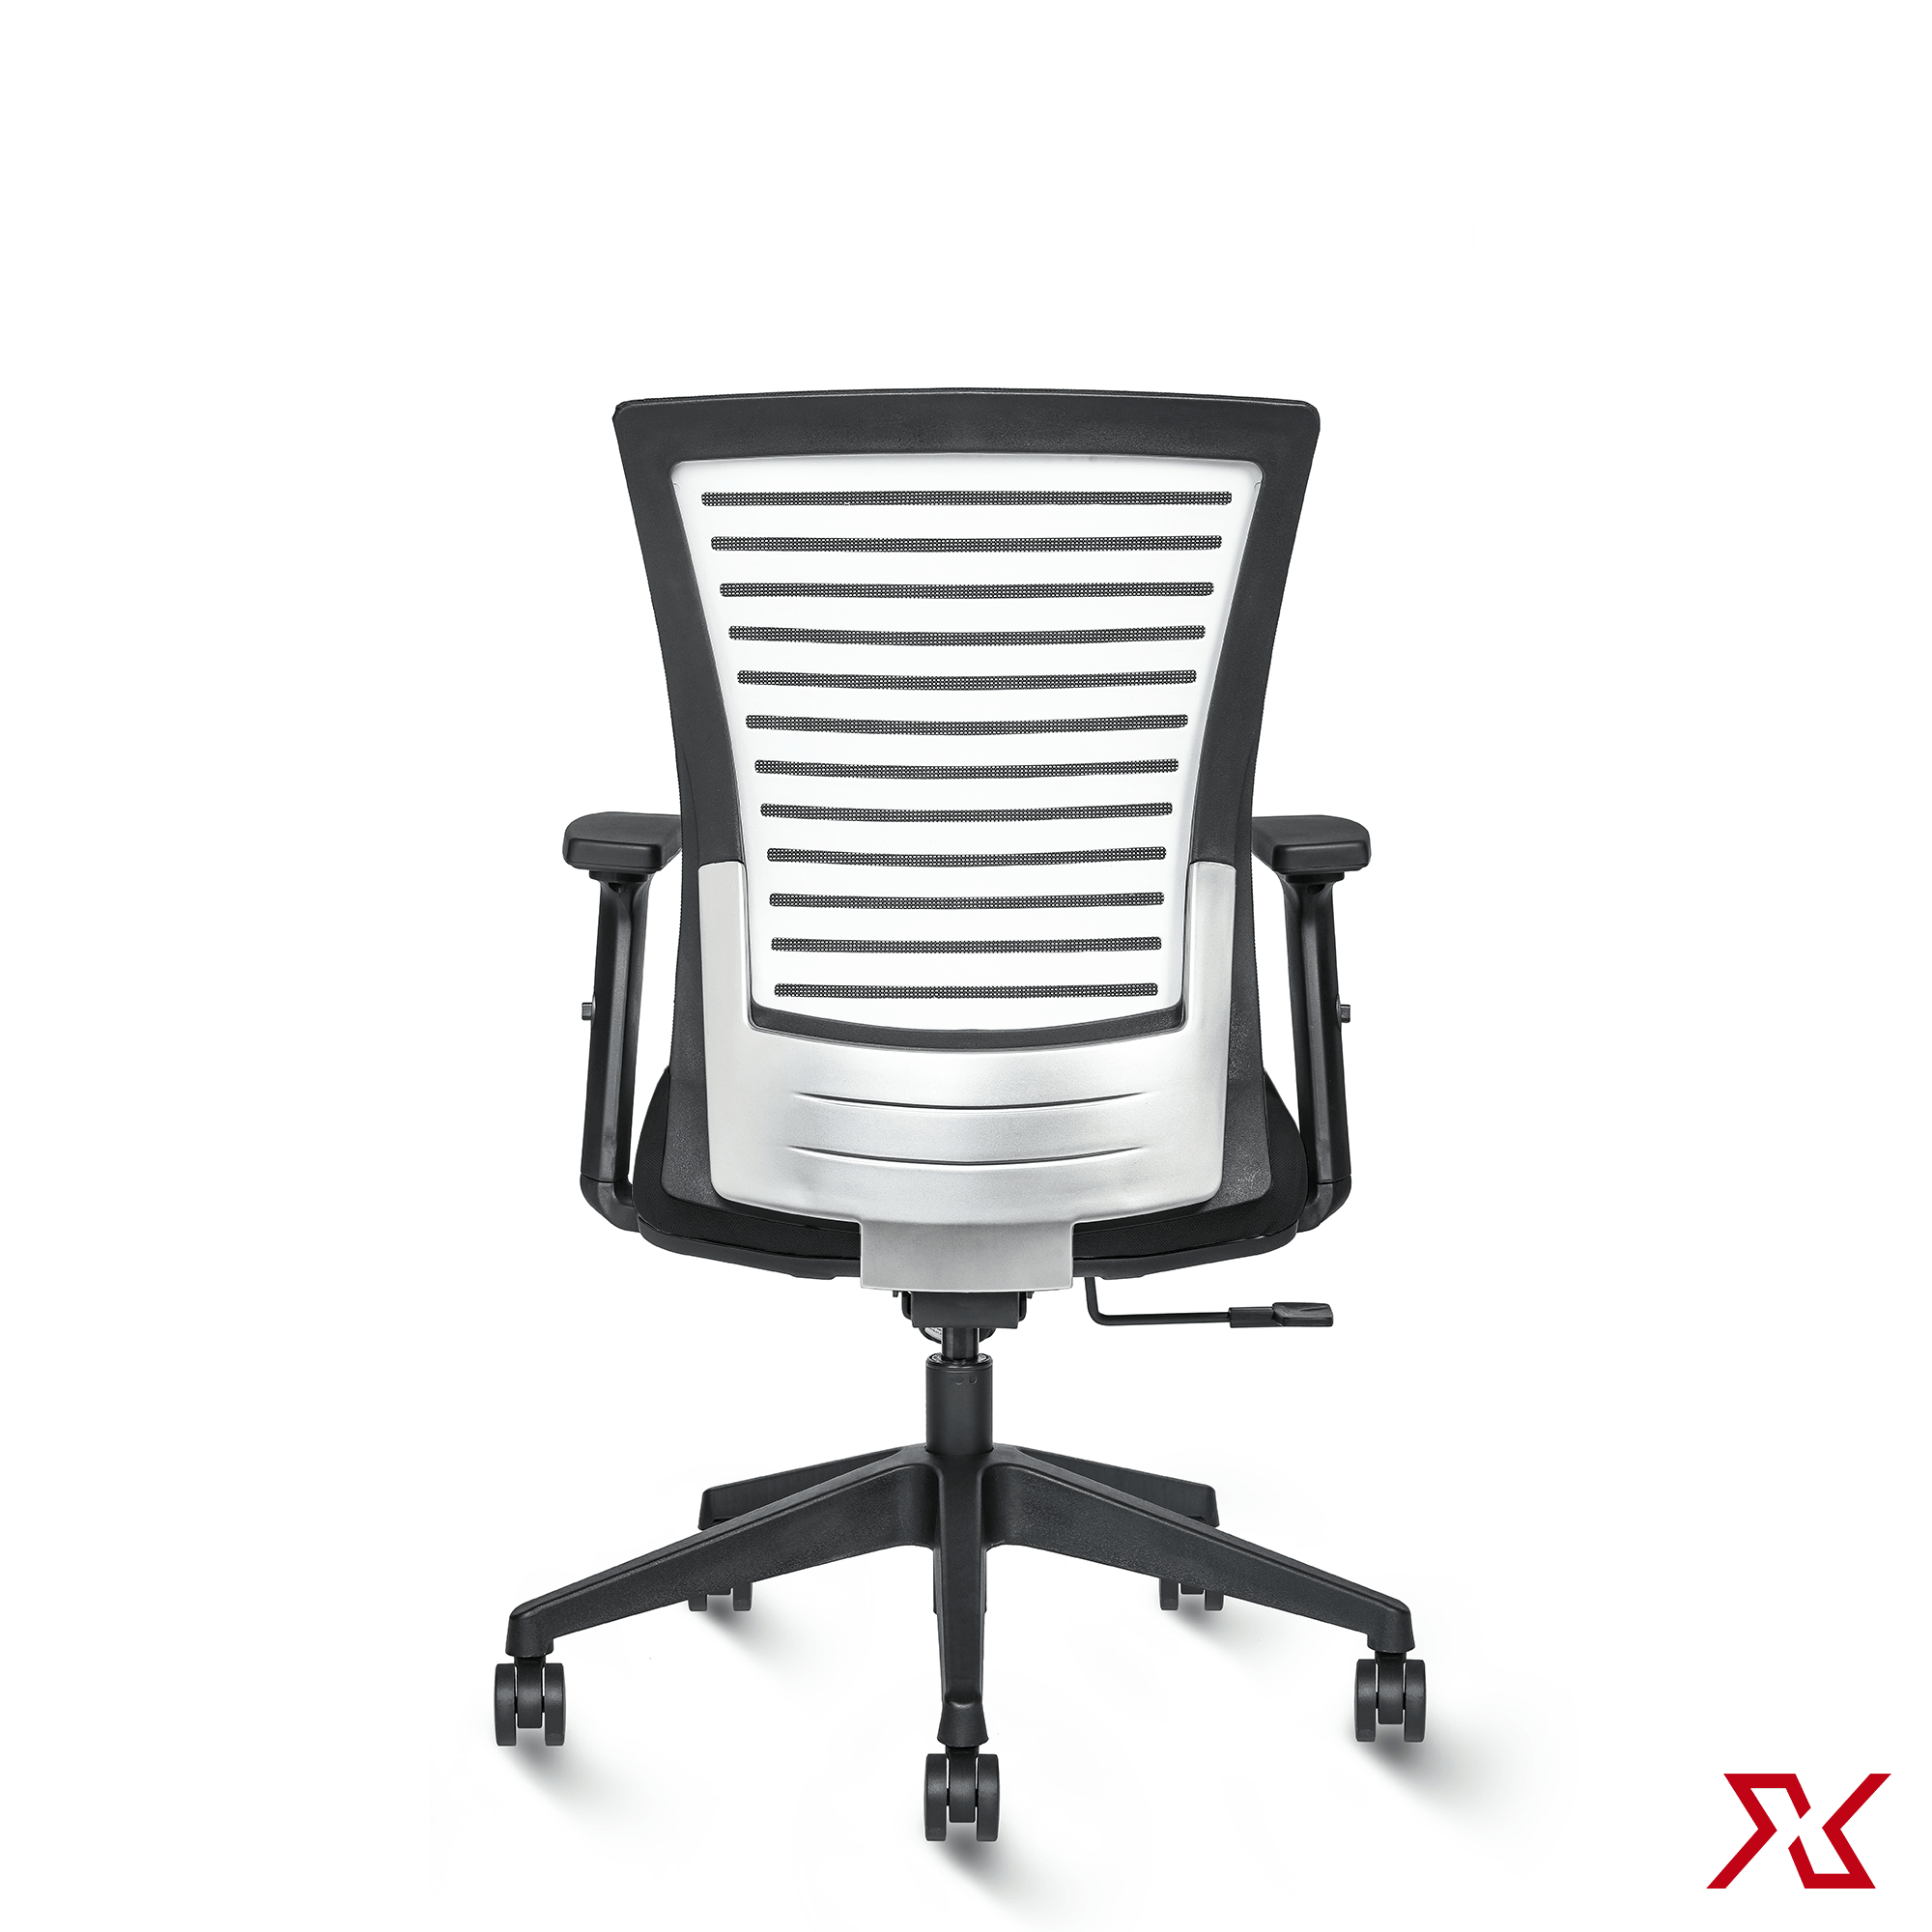 VINO Medium Back LX (Black Chair) – Exclusiff Seating Sytems